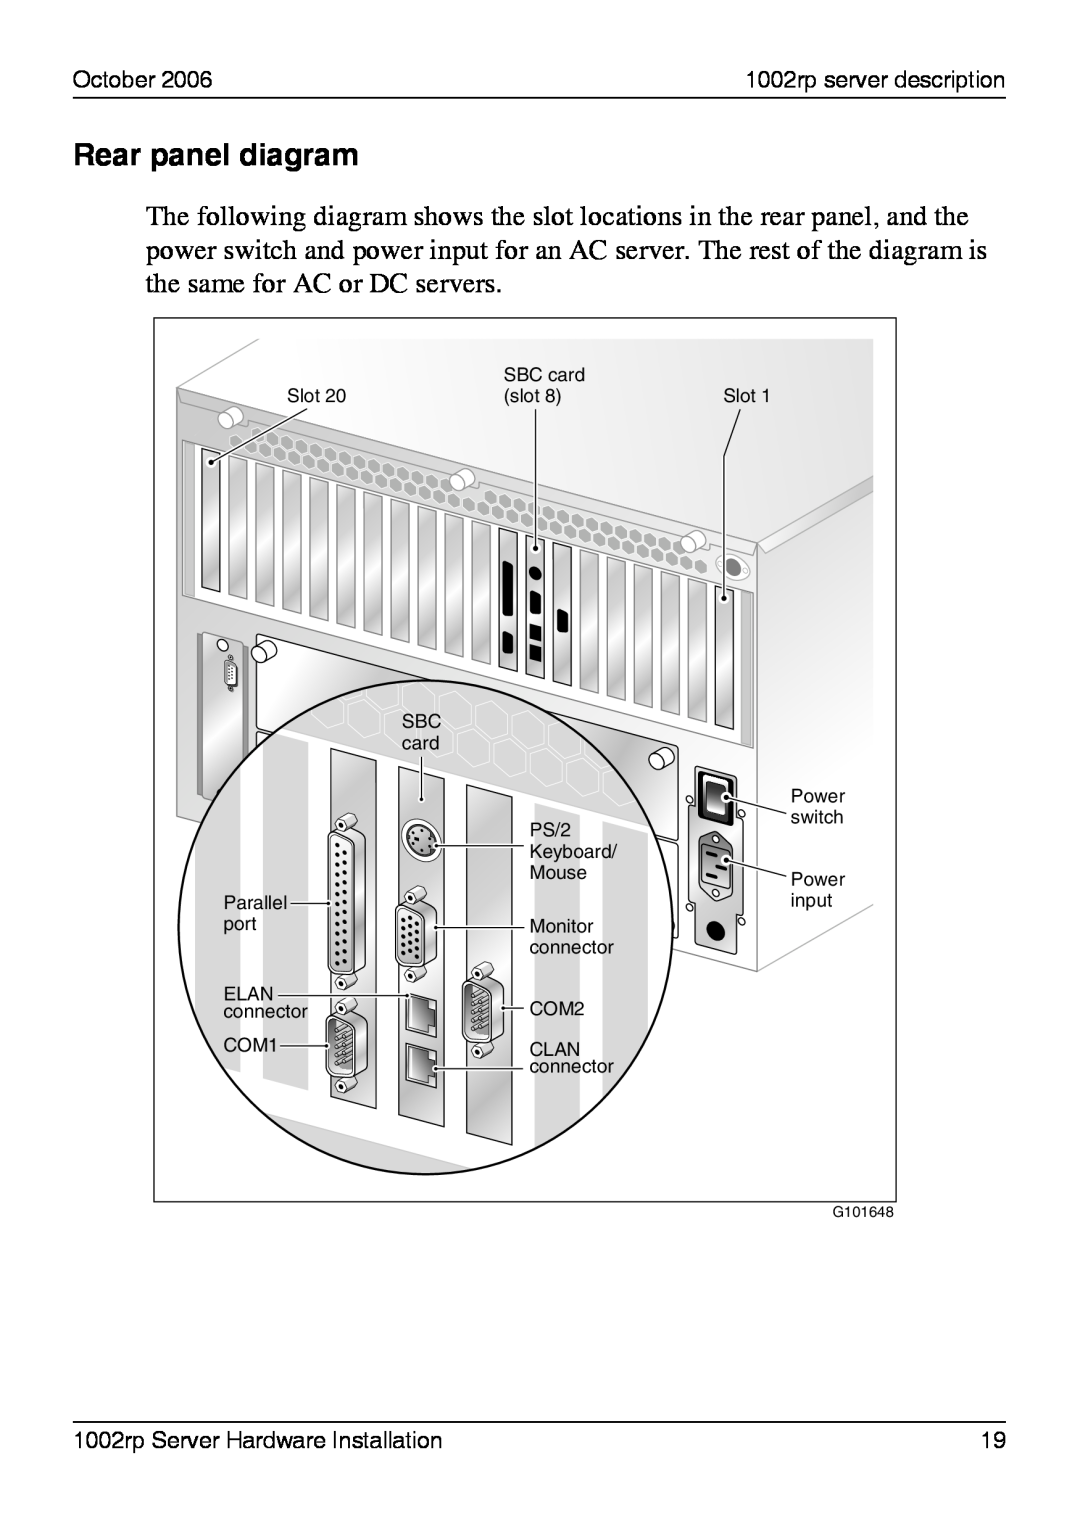 Nortel Networks manual Rear panel diagram, 1002rp server description 